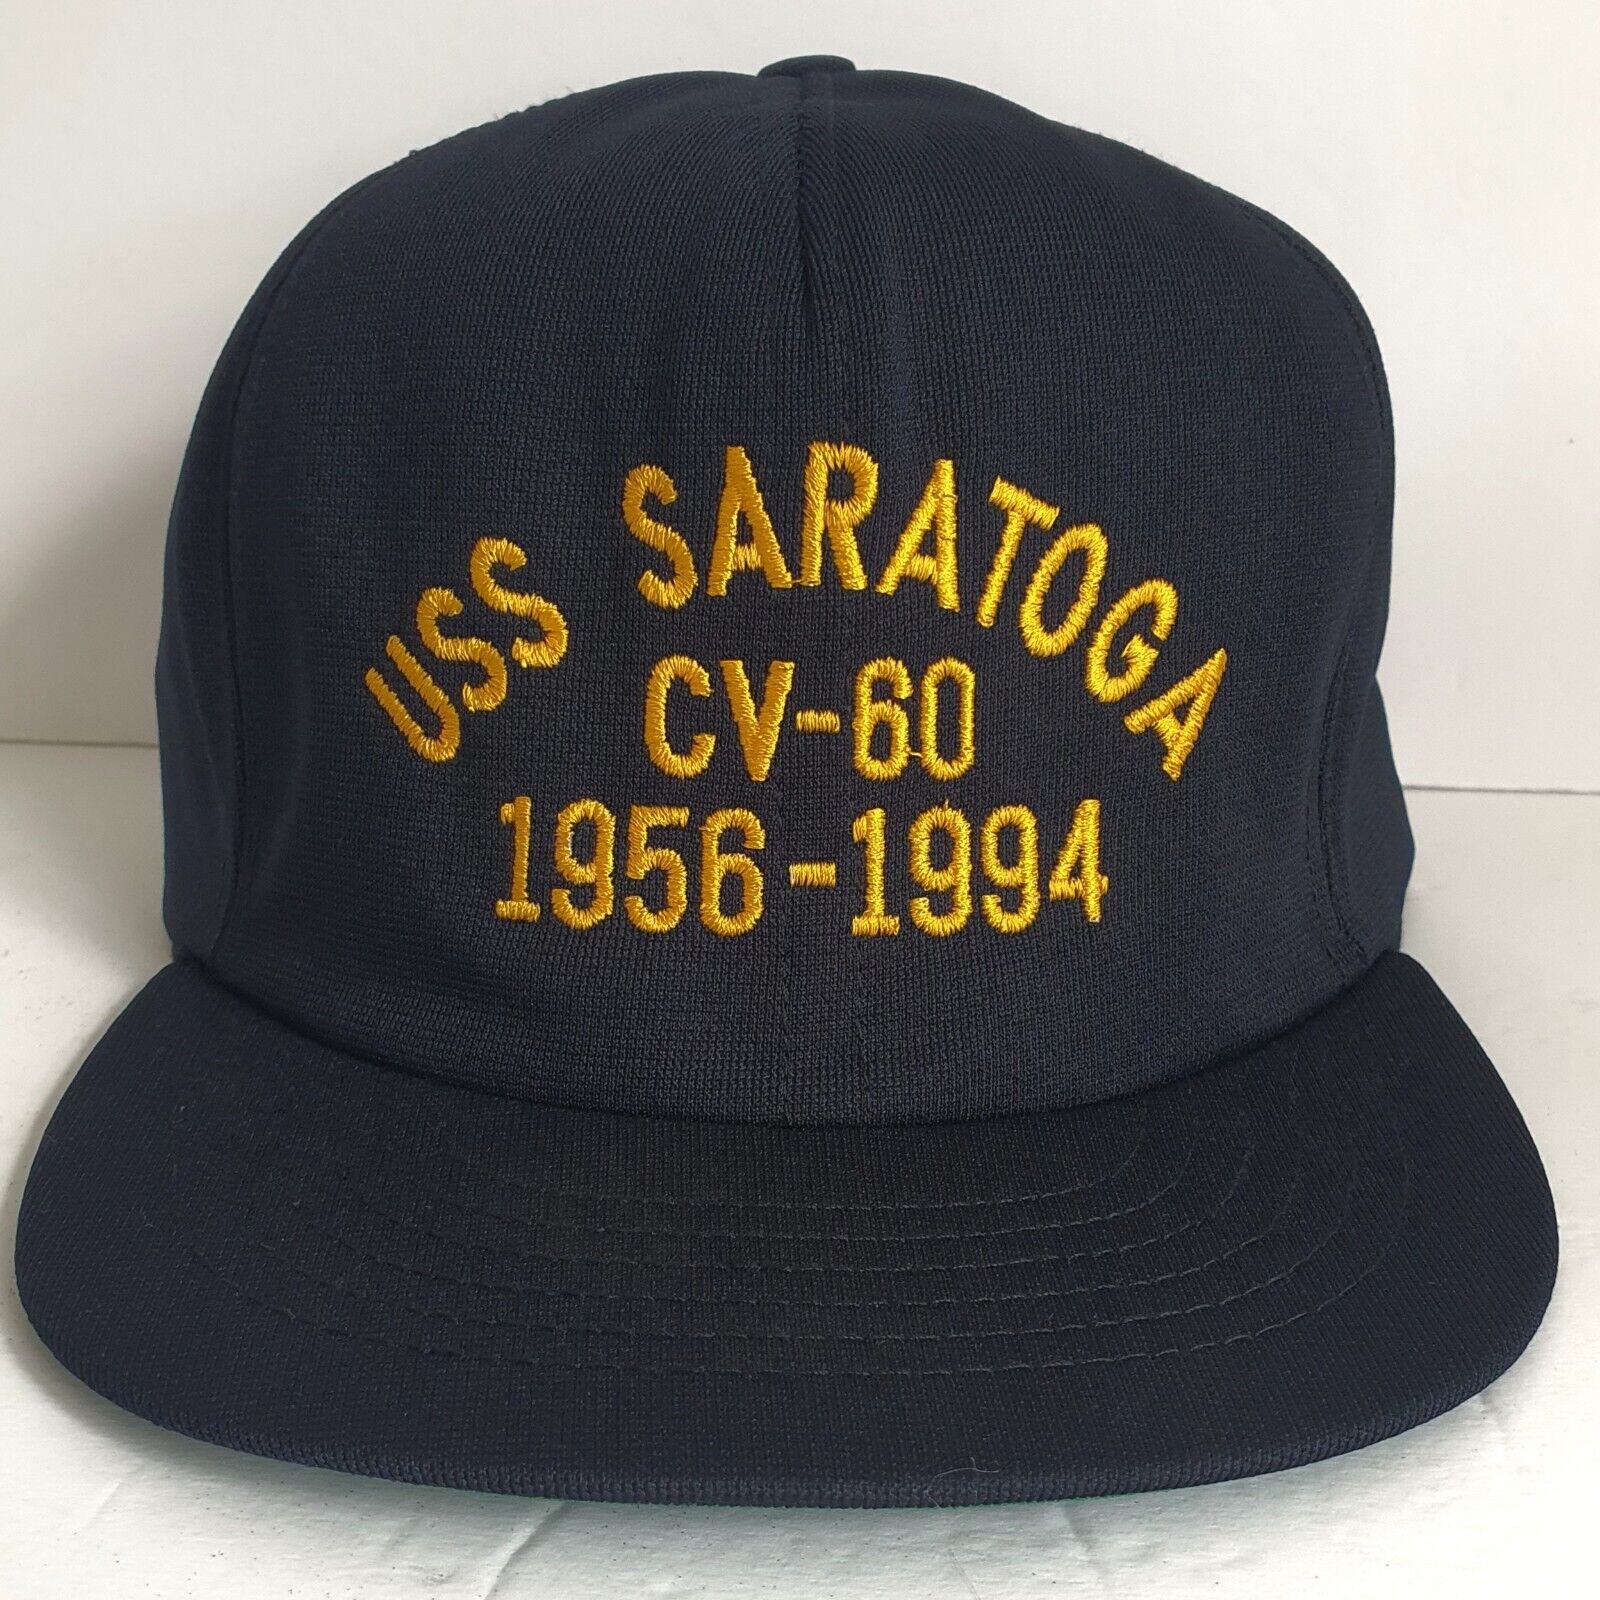 Vintage USS Saratoga CV-60 Hat Black  SnapBack Cap Adjustable One Size Fits All 